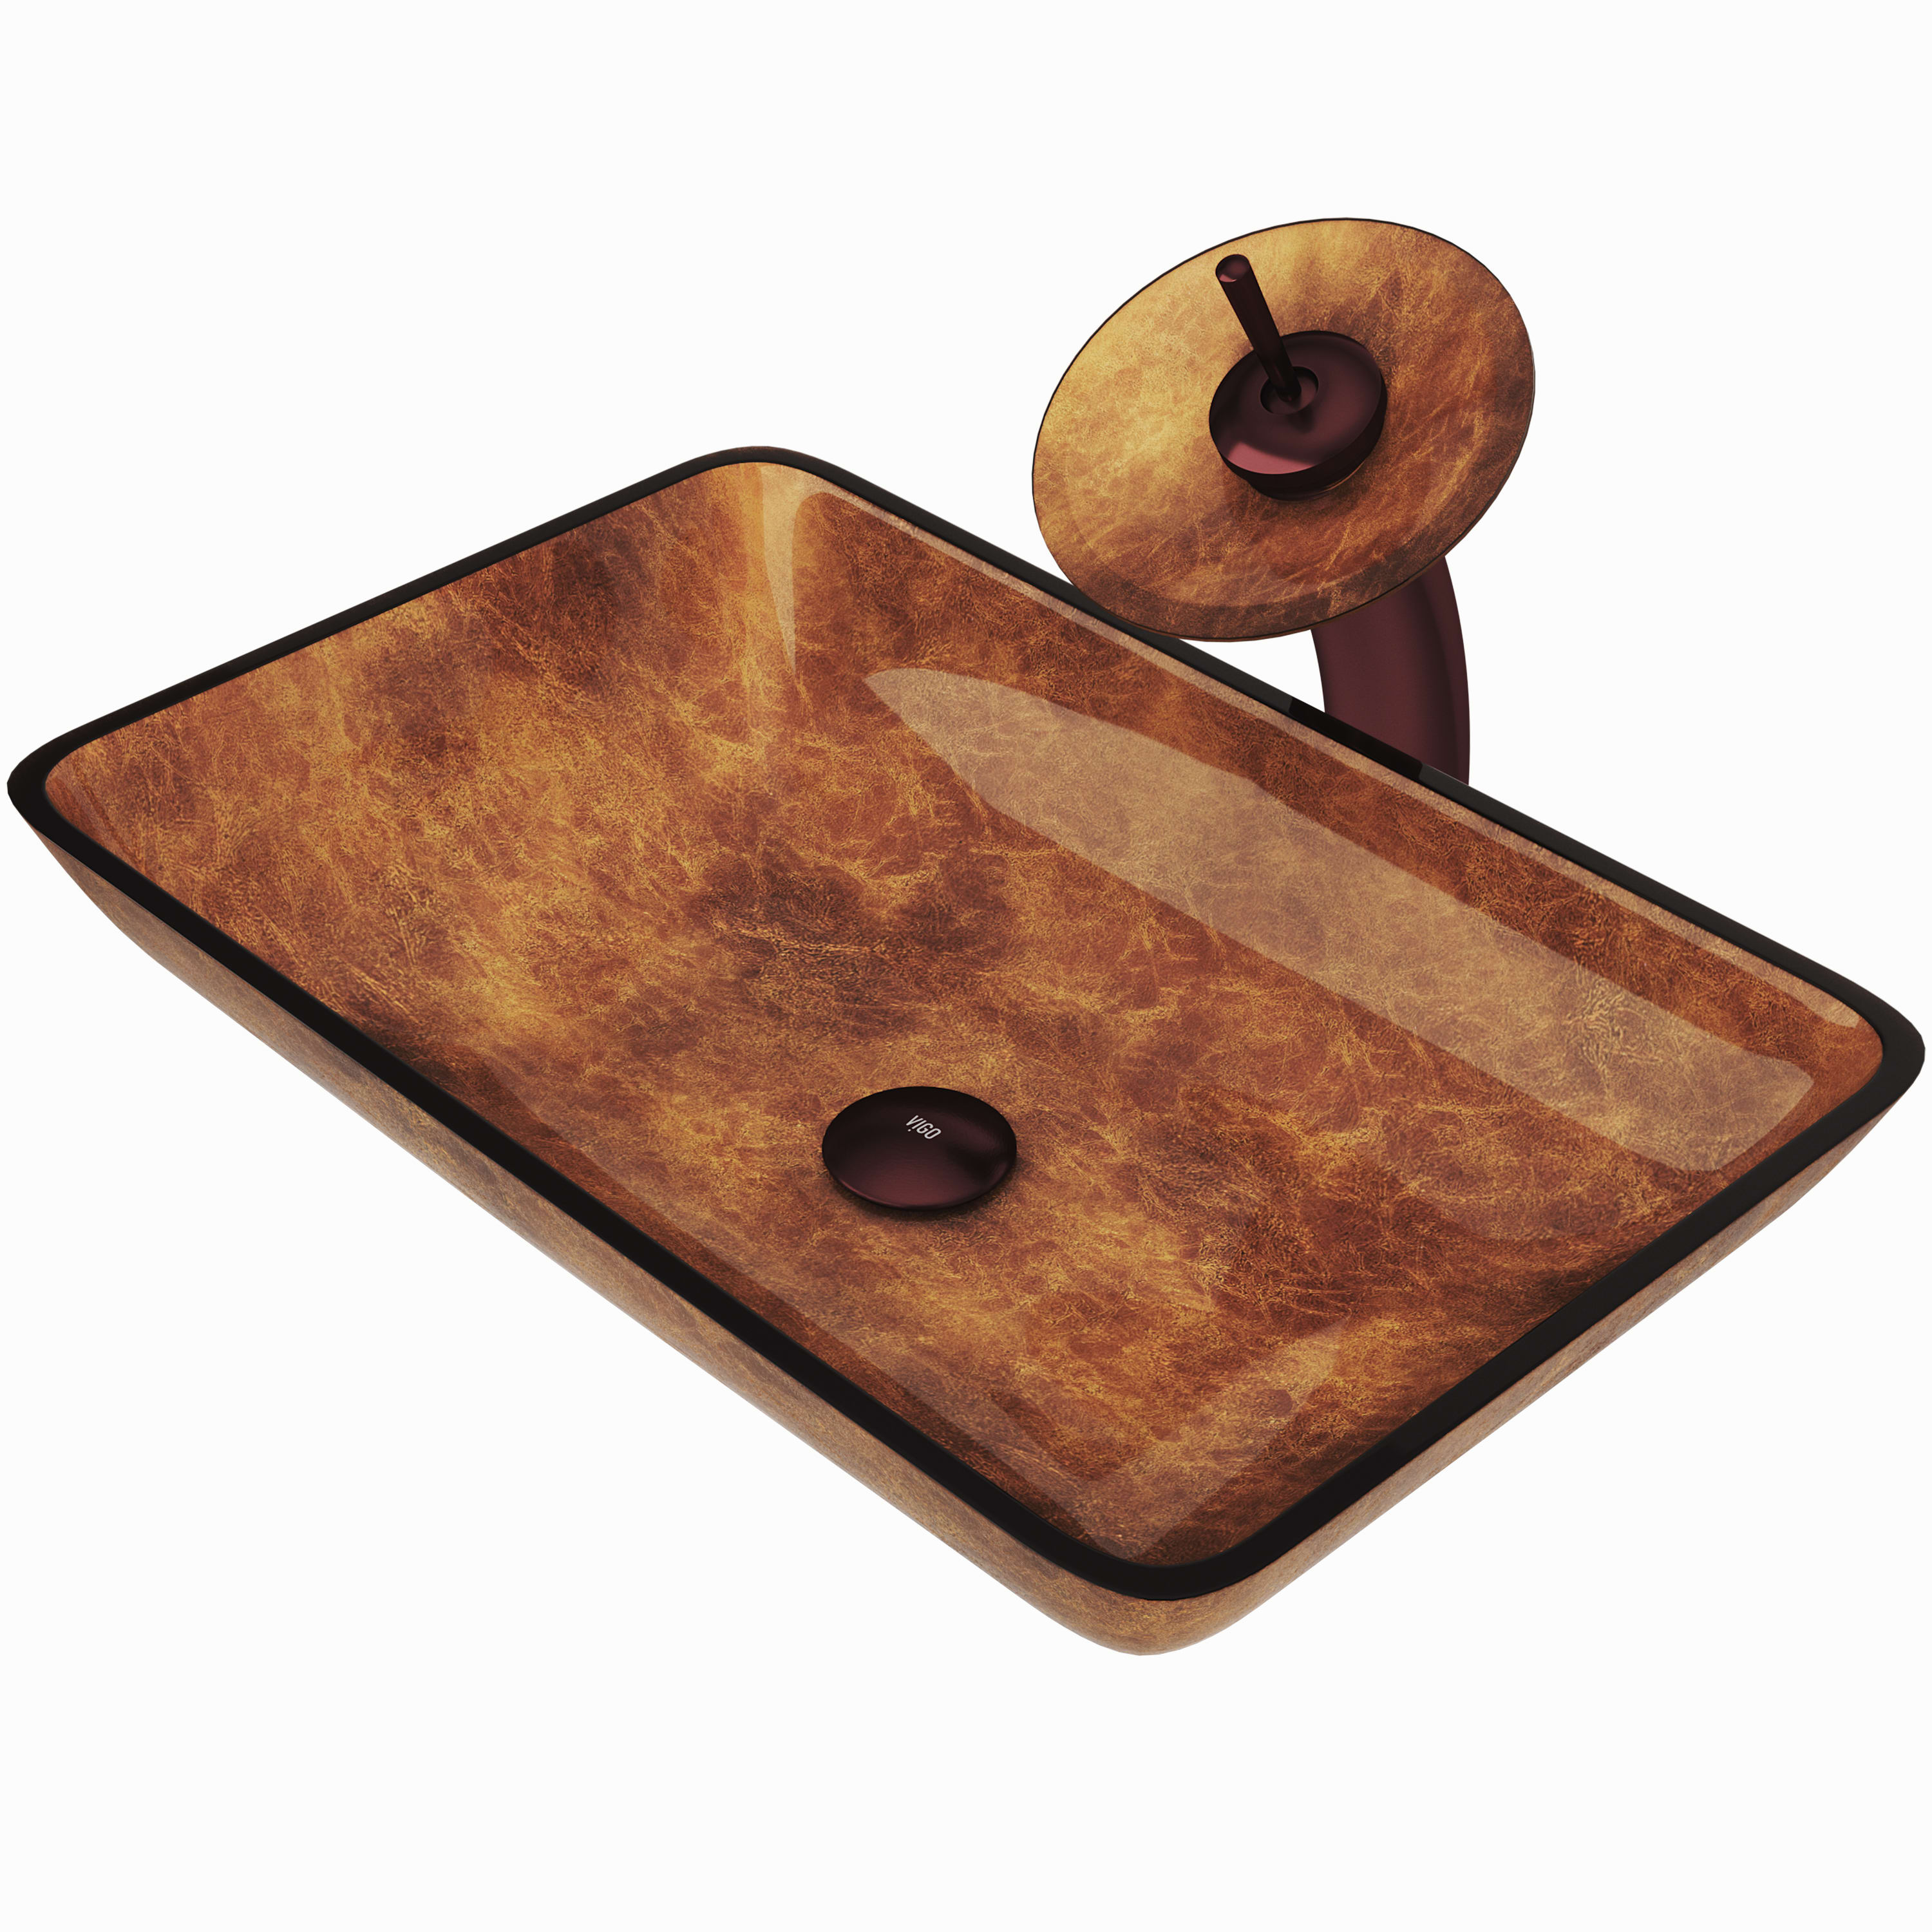 Vigo Vgt007rbrct Oil Rubbed Bronze 22 1 2 Glass Bathroom Vessel